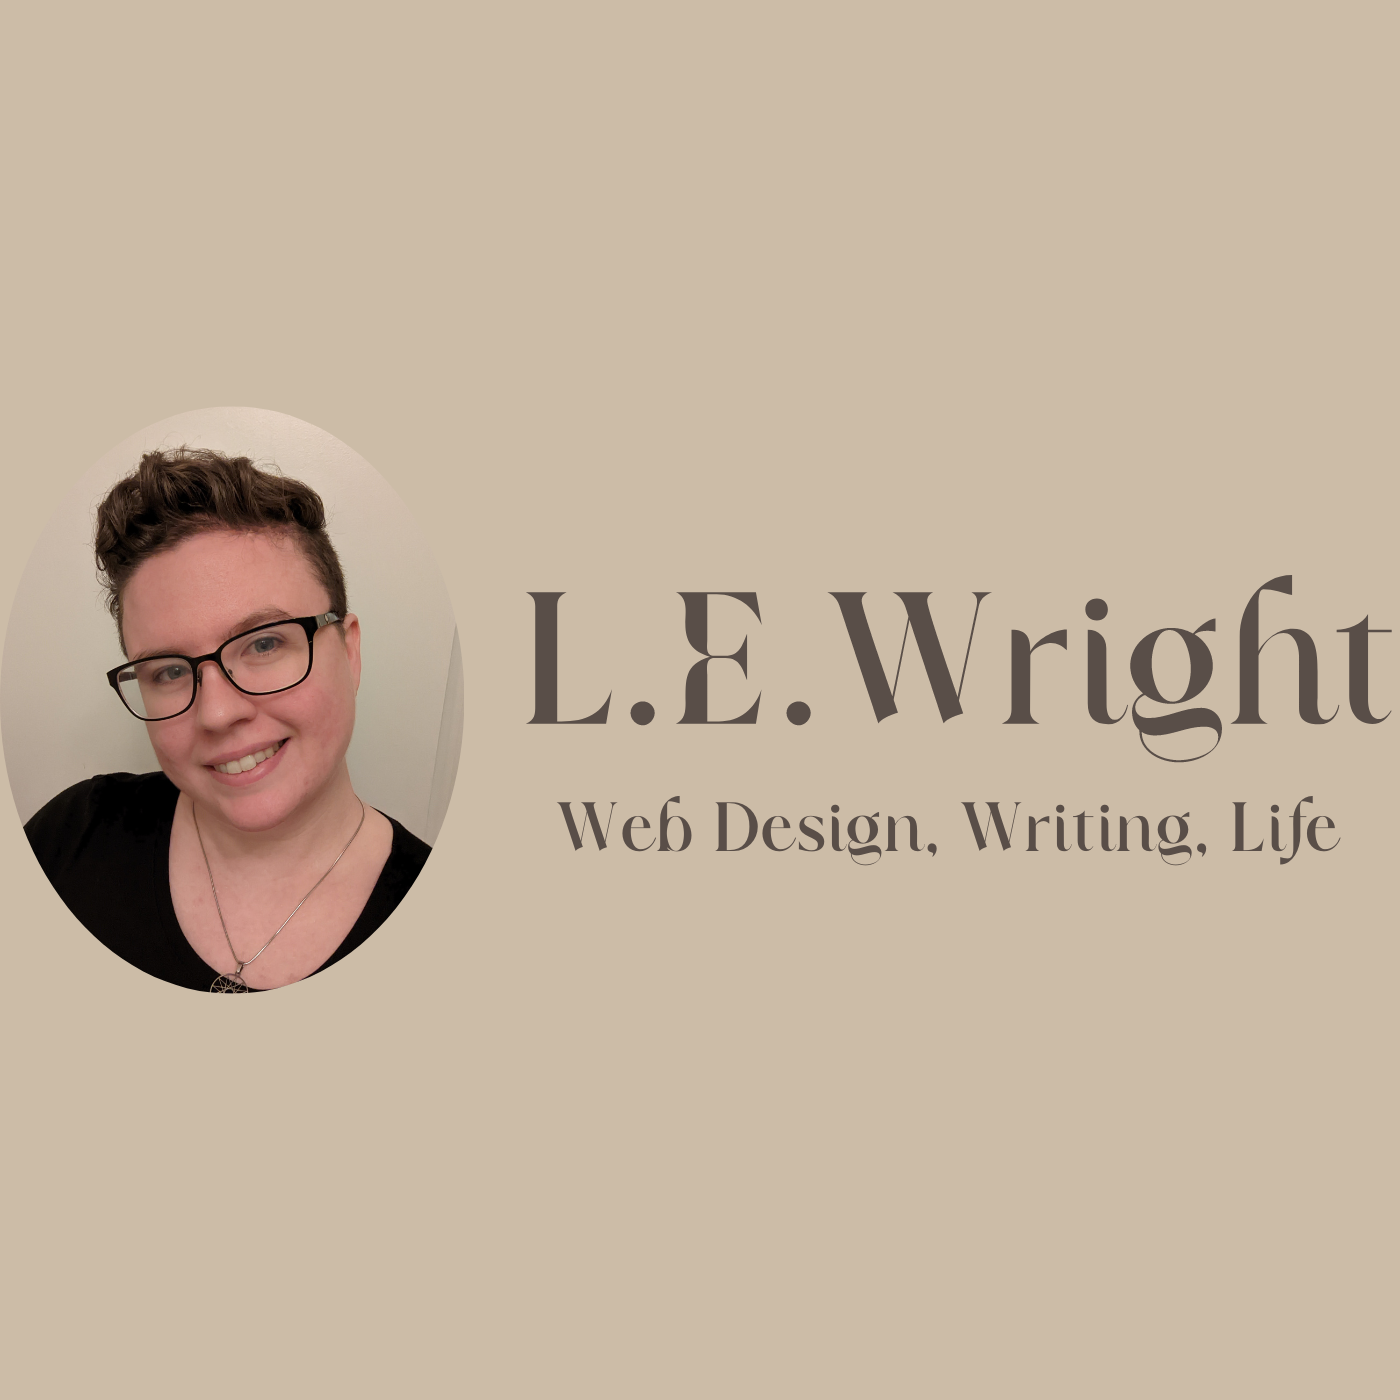 L. E. Wright Web Design, Writing, Life